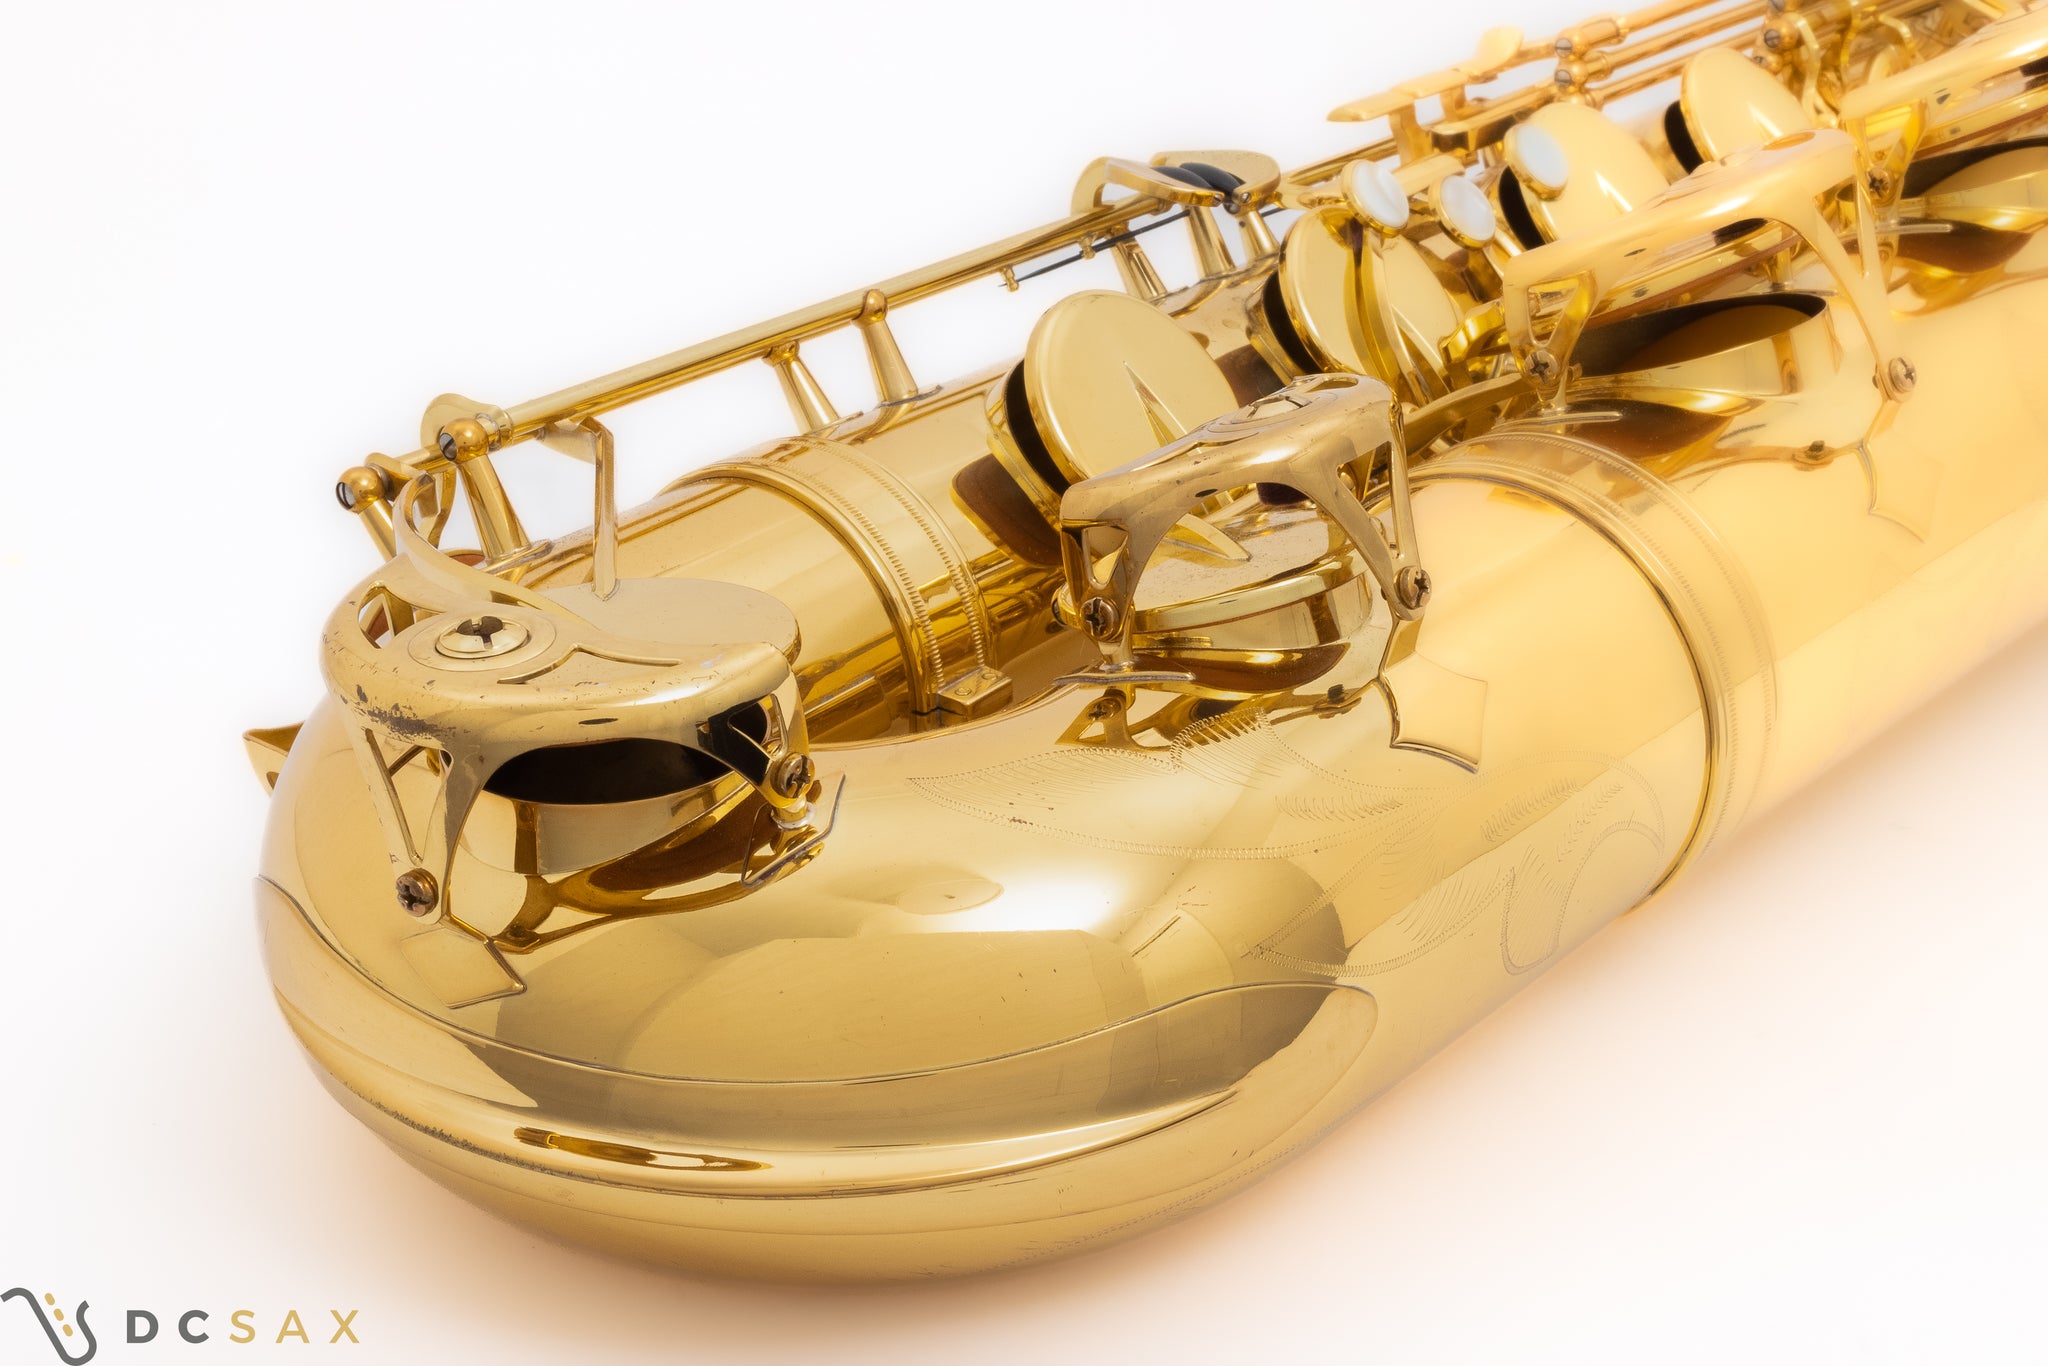 Yamaha YBS-62 Purple Label Baritone Saxophone